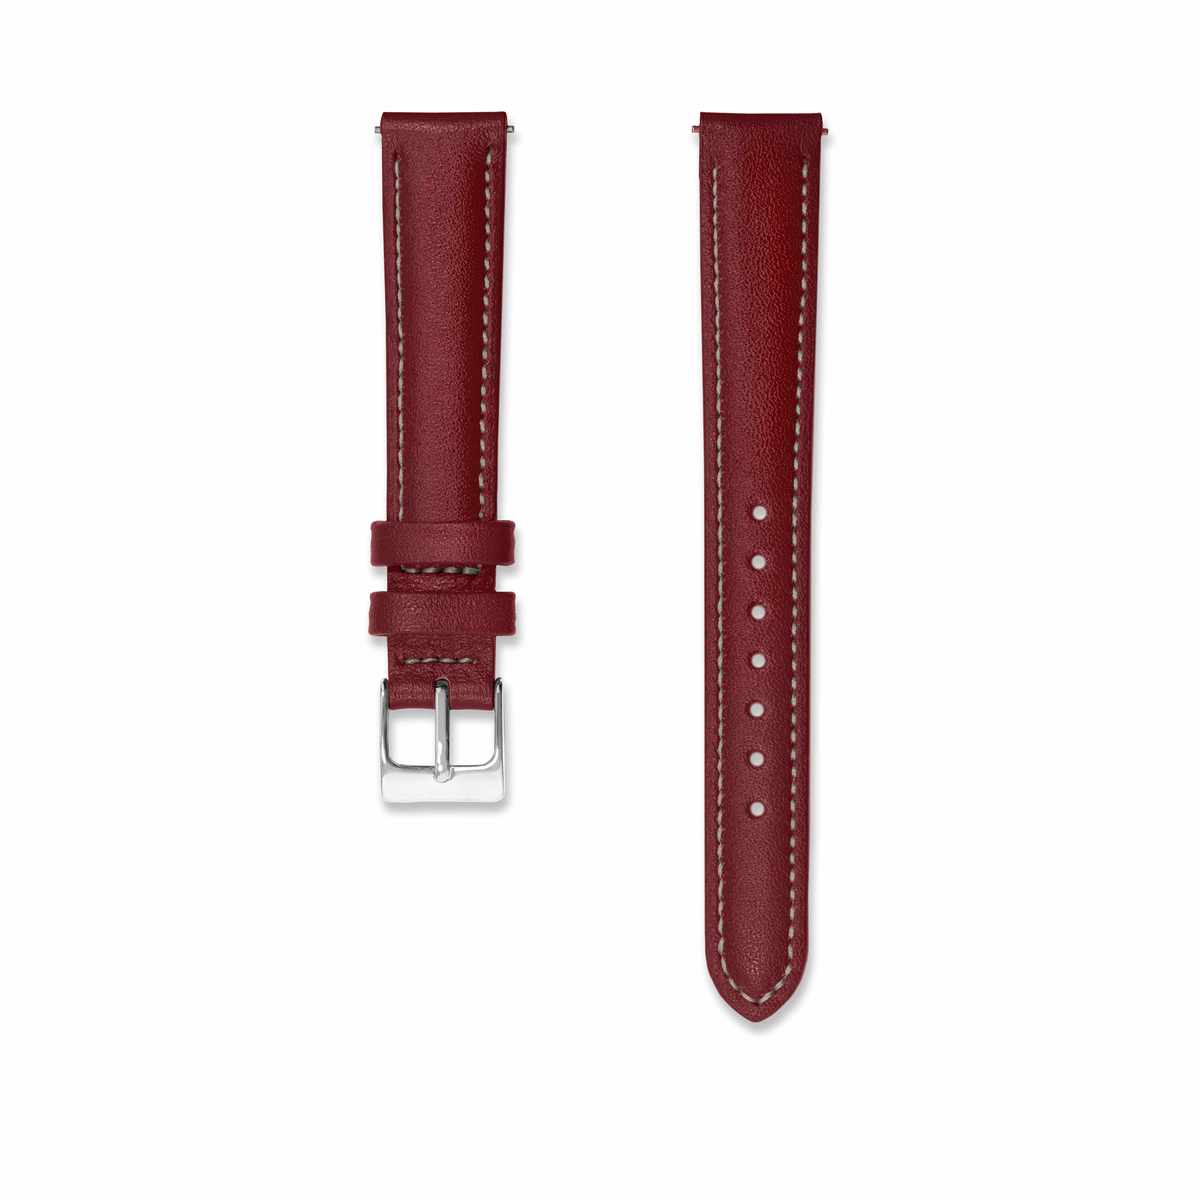 Burgundy leather strap 14mm